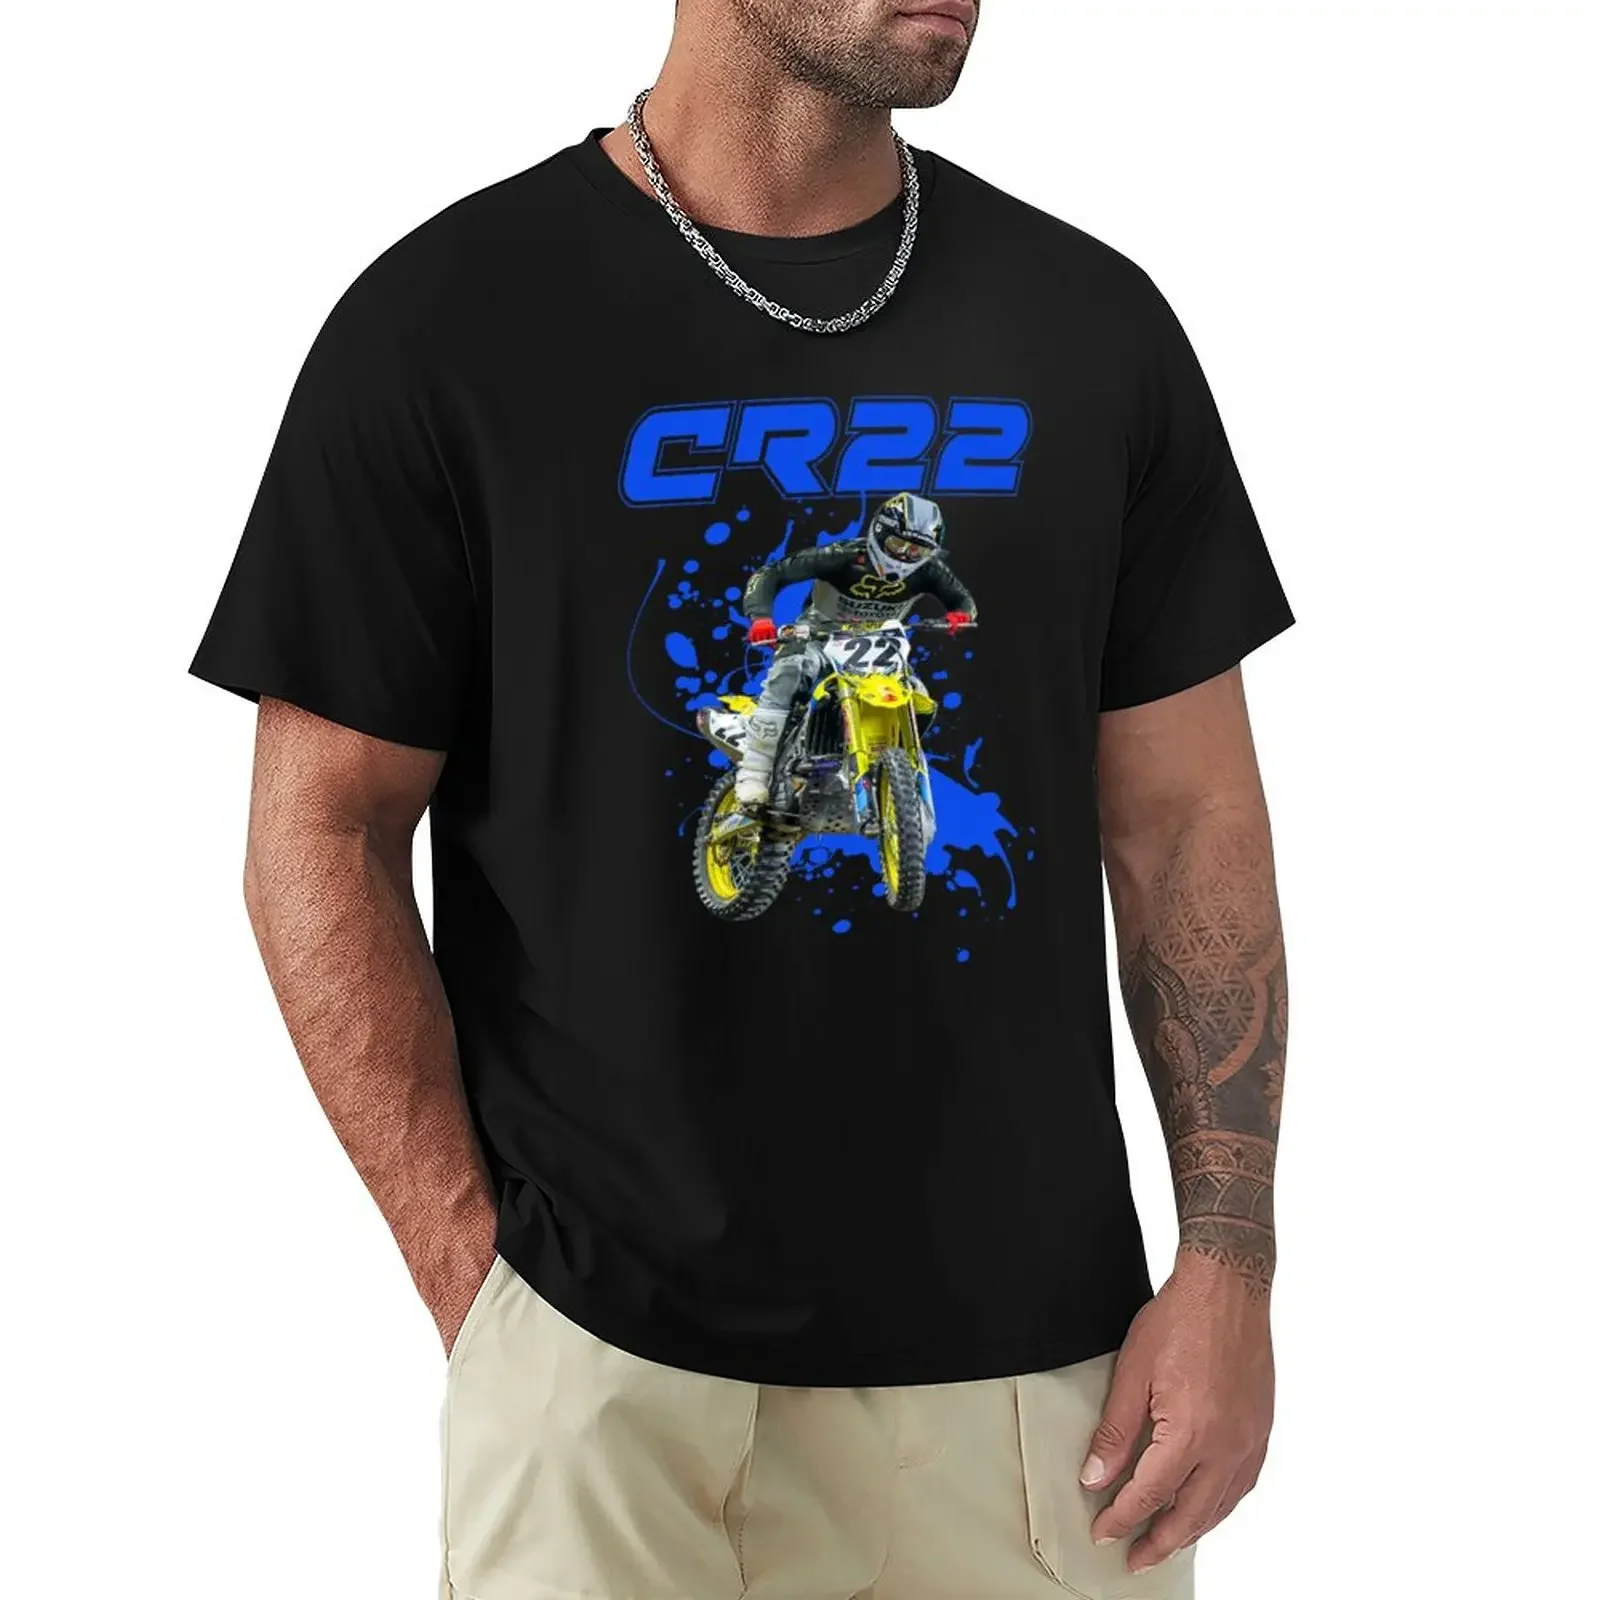 

Chad Reed 22 Motocross and Supercross Champion CR22 Dirt Bike Gift Design T-Shirt oversizeds tops Men's cotton t-shirt